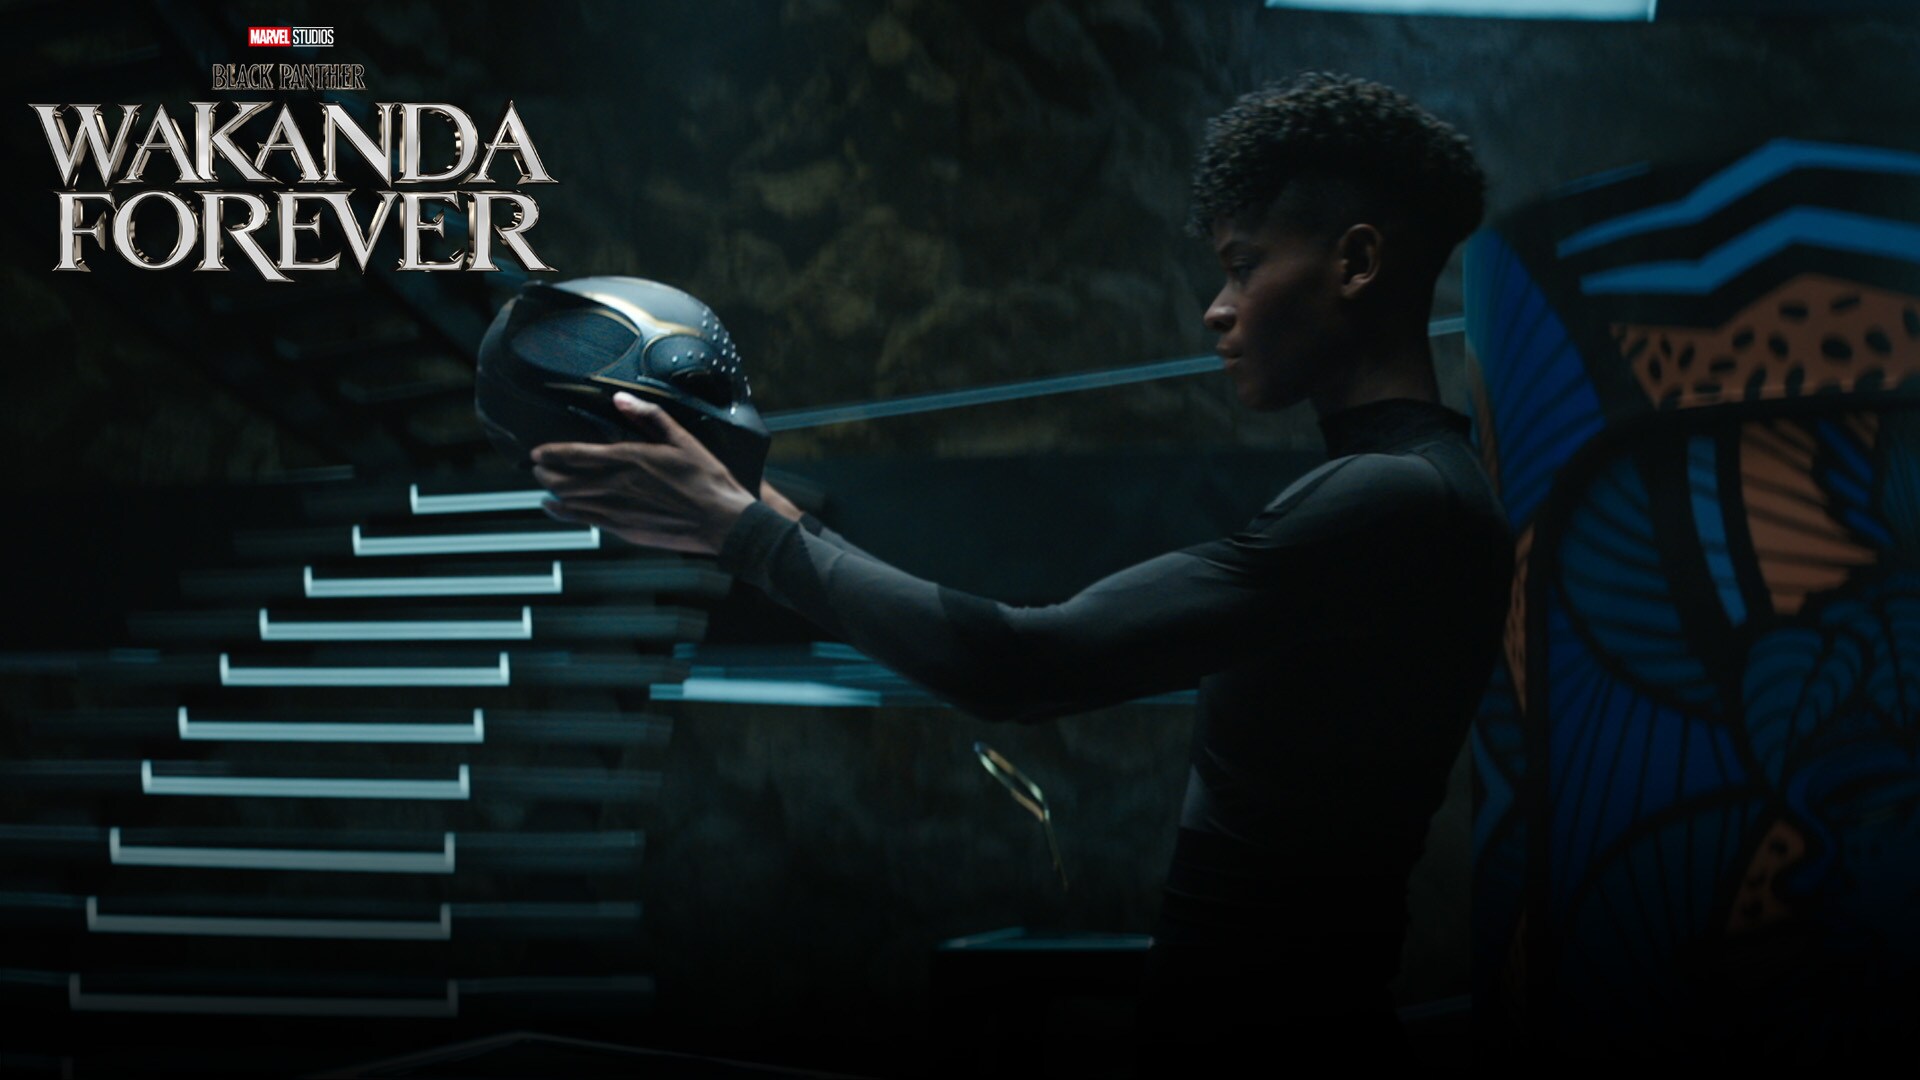 Marvel Studios’ Black Panther: Wakanda Forever | #1 Movie for 2 Weeks